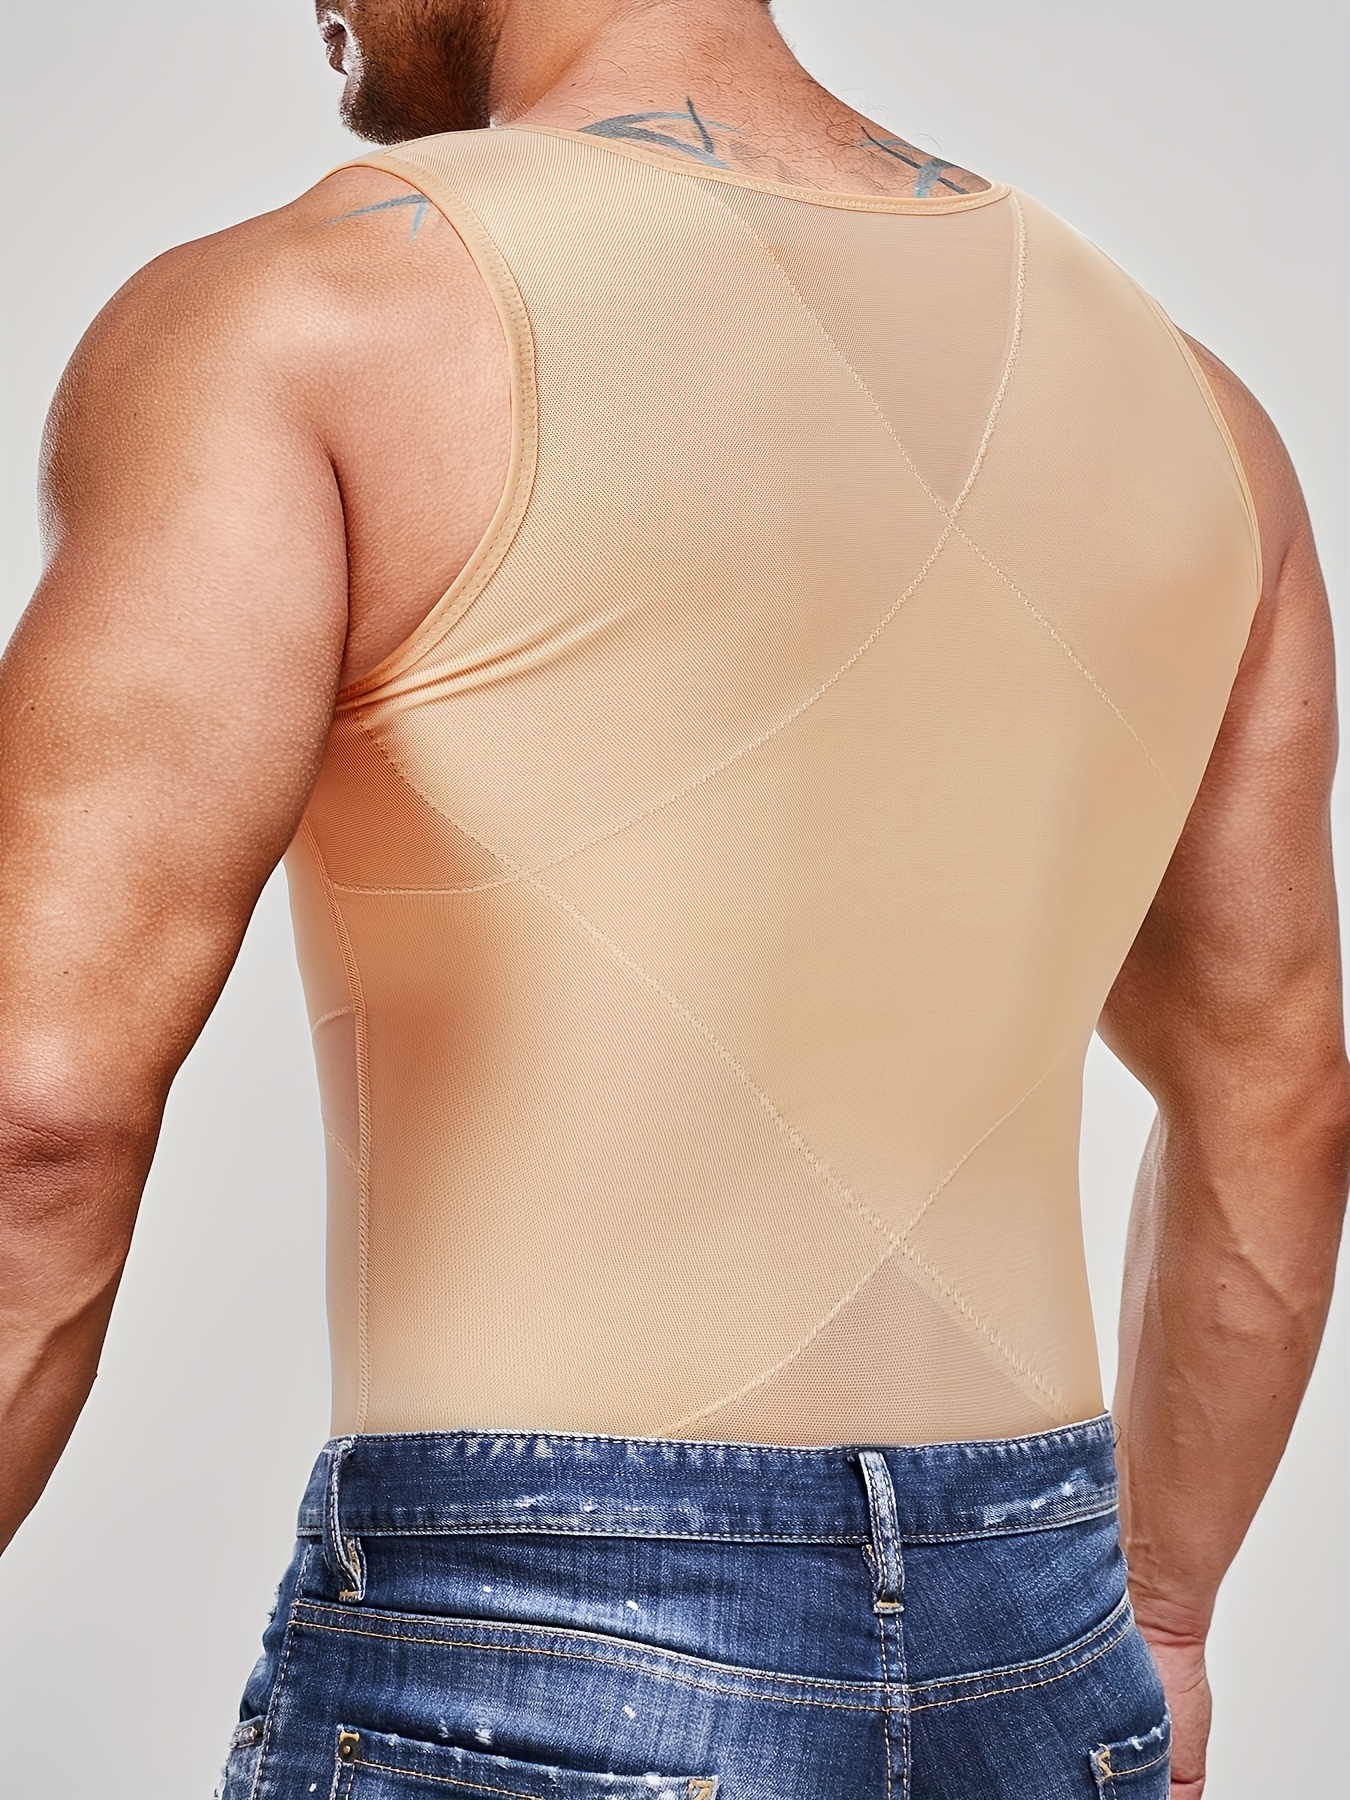 S SYMEFER Men Compression Shirt for Body Shaper Slimming Undershirt Tank  top for gynomastica Sleeveless Shapewear Vest Men (UAE/KSA, Alpha, XXL,  Regular, Regular, White) price in UAE,  UAE